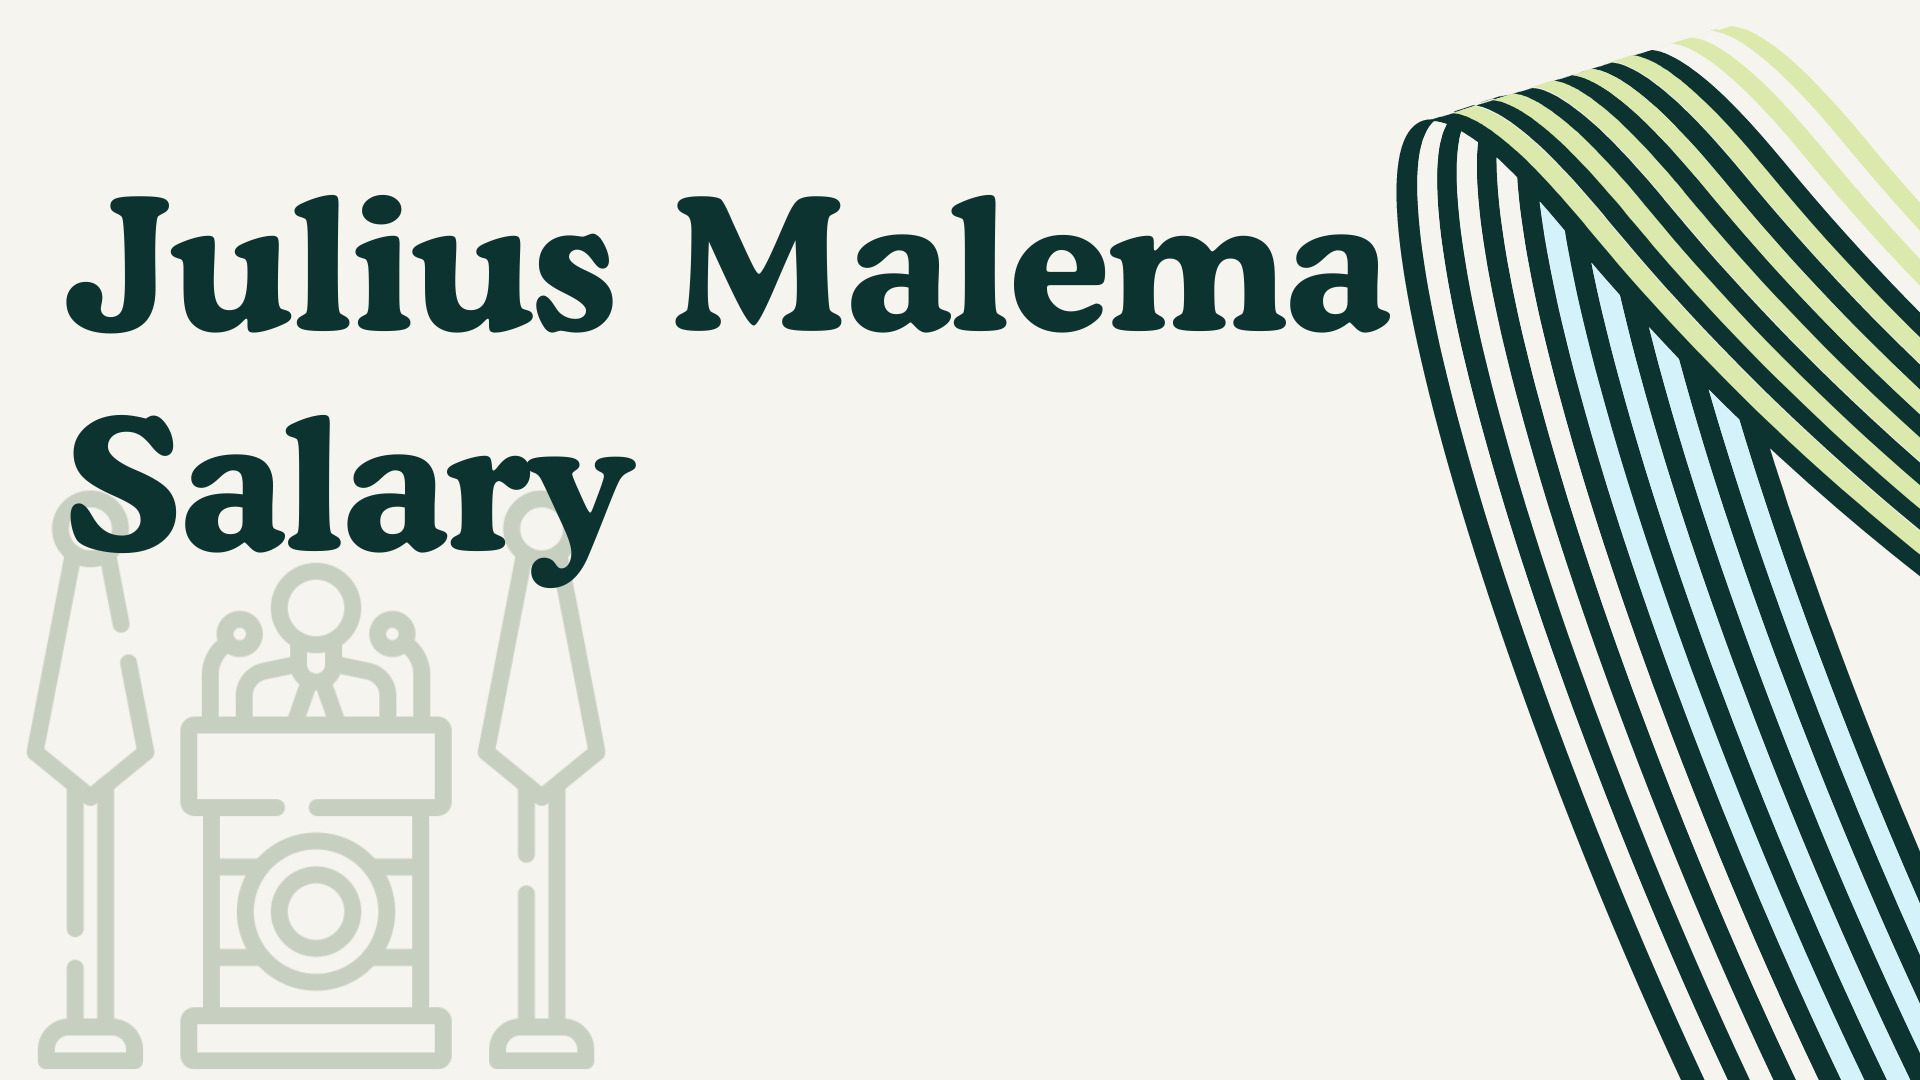 Julius Malema Salary